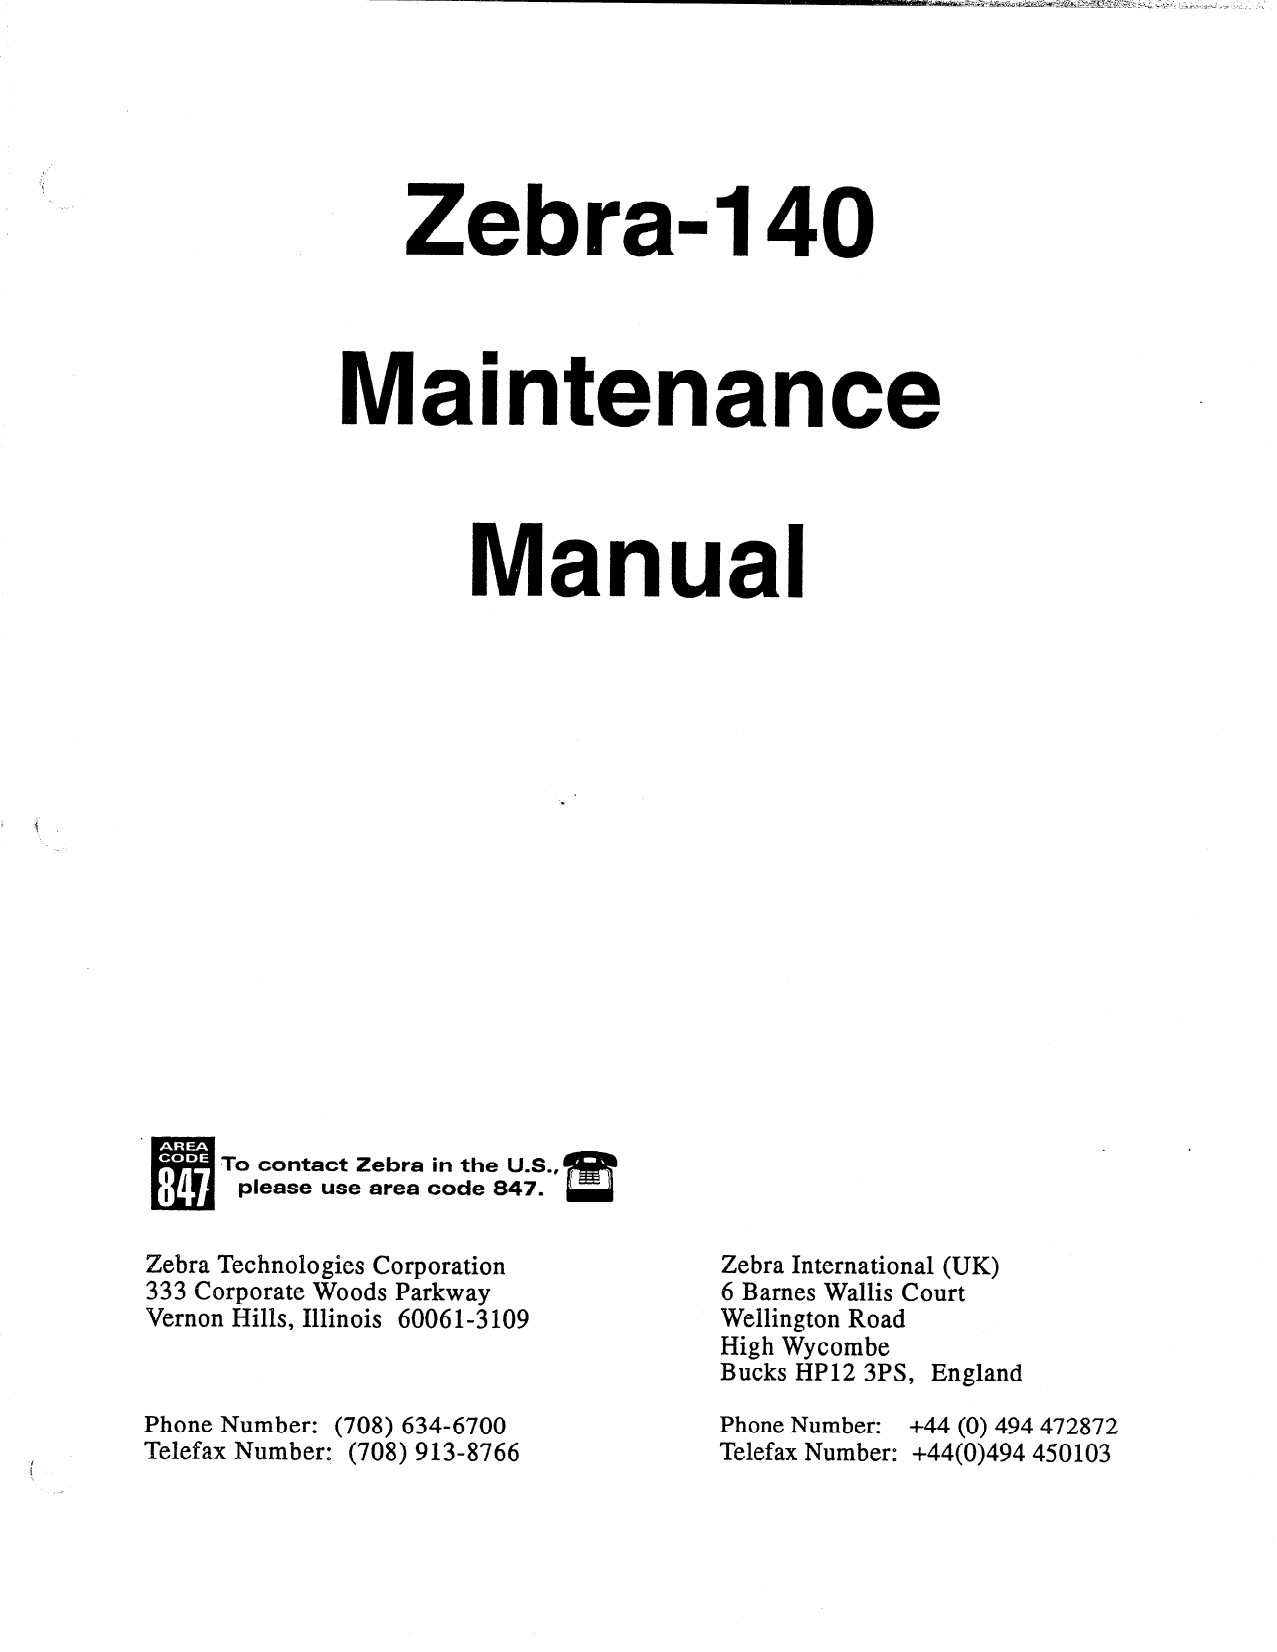 Zebra Label 140 Maintenance Service Manual-1